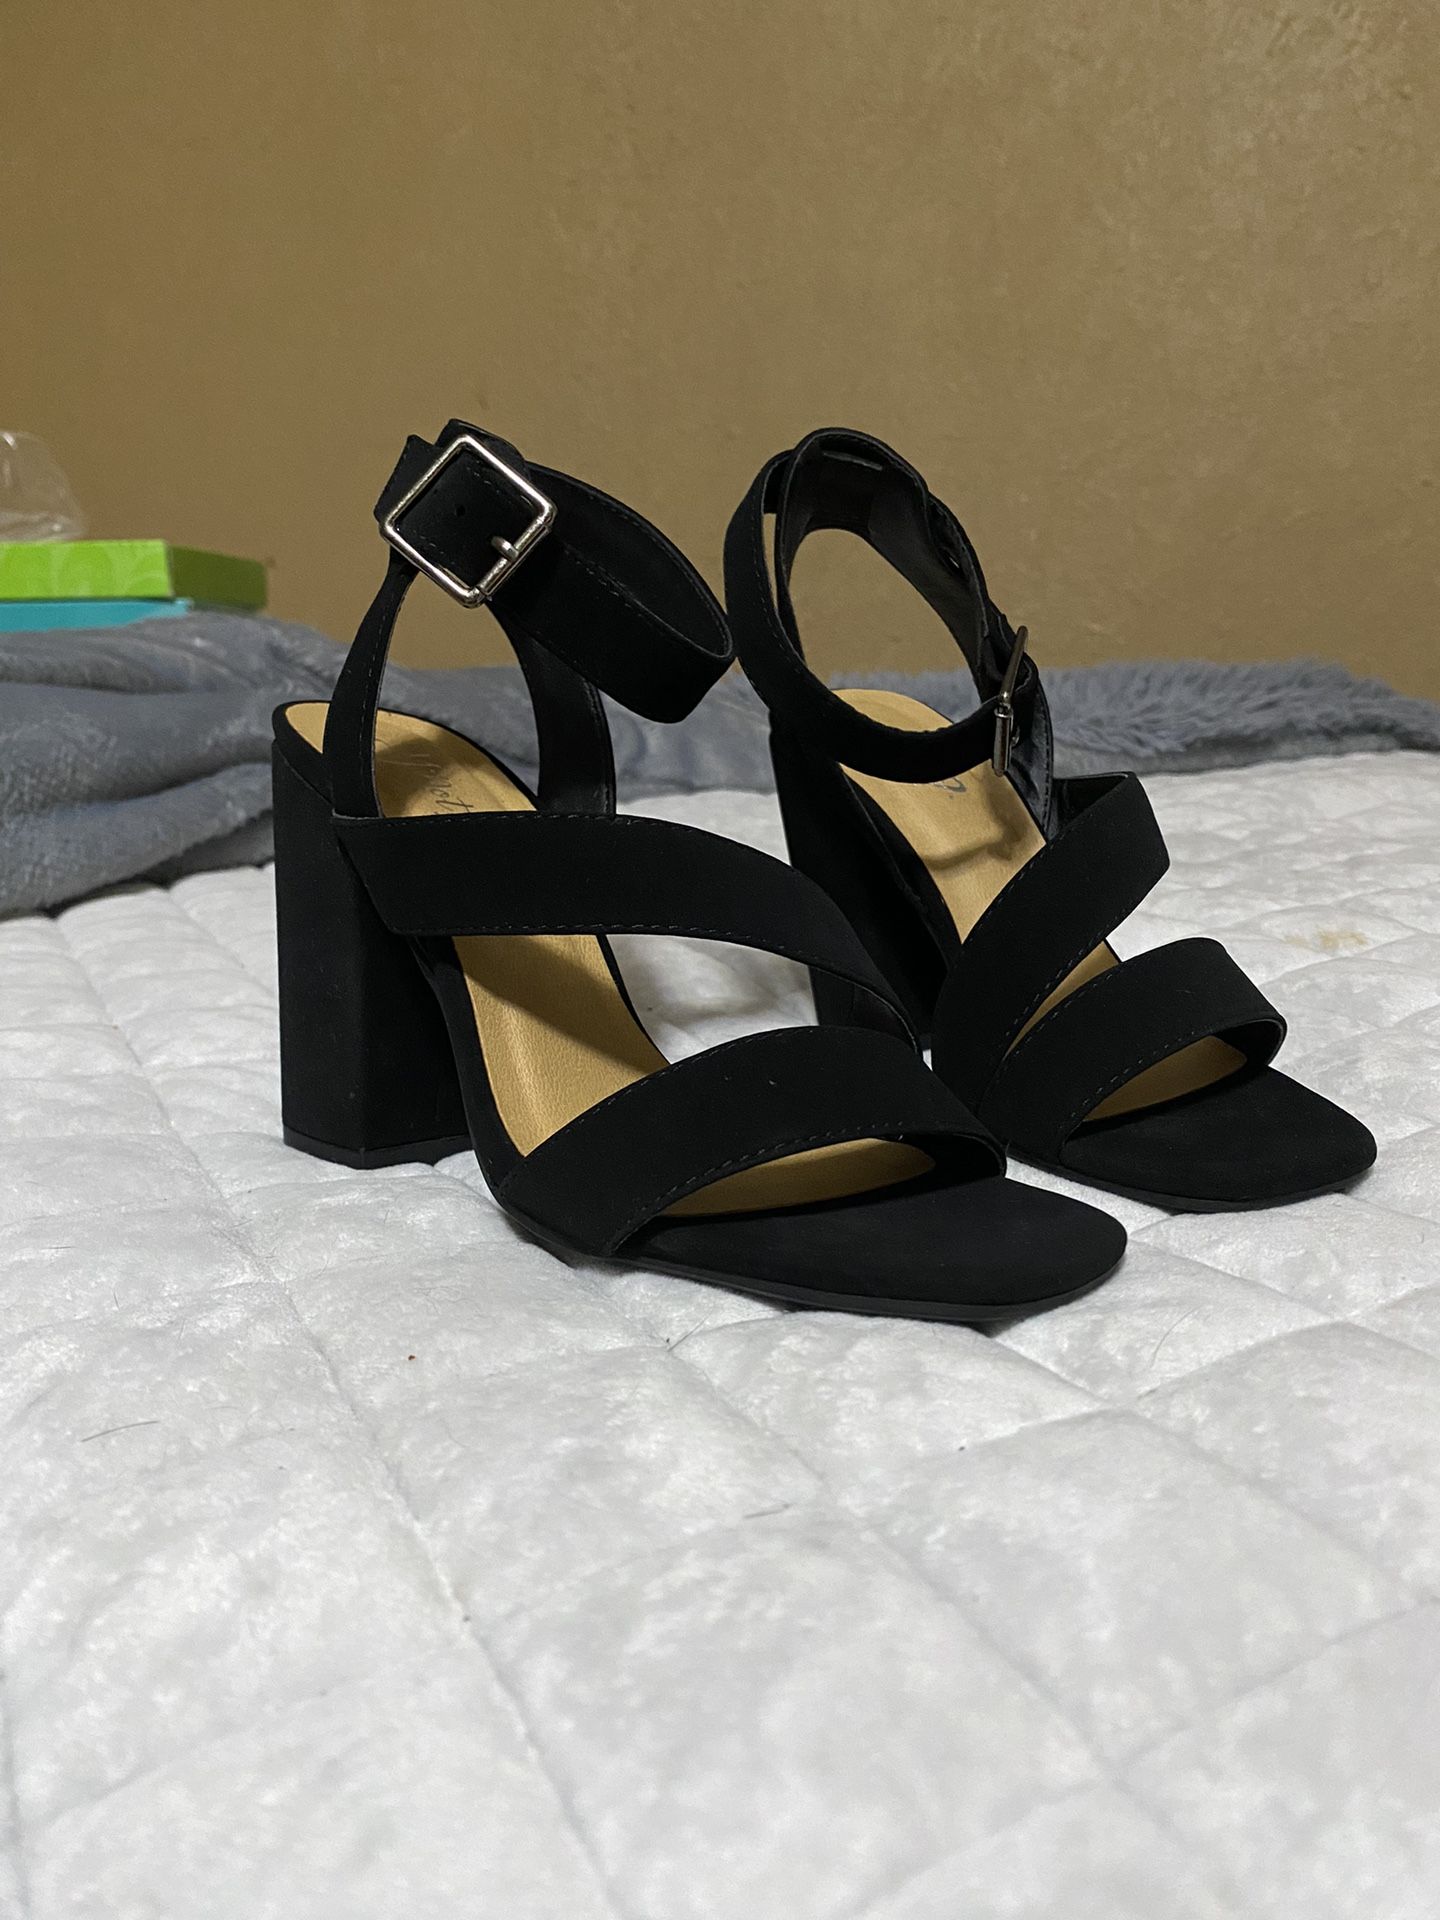 Black High Heels Size 5M